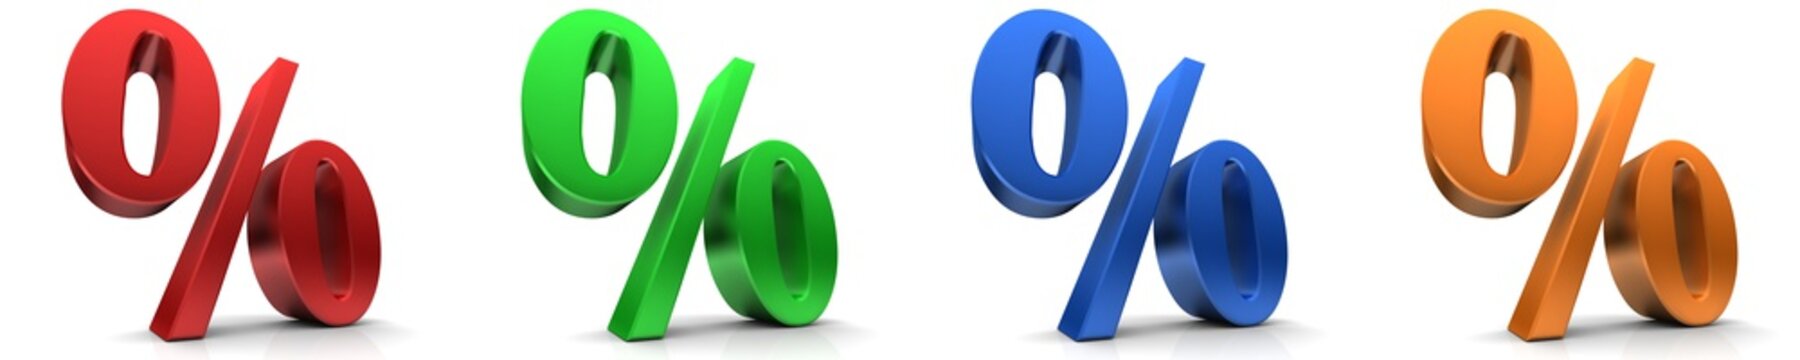 Percentile percent percentage % interest rate sign symbol red green blue orange sale 3d tag label